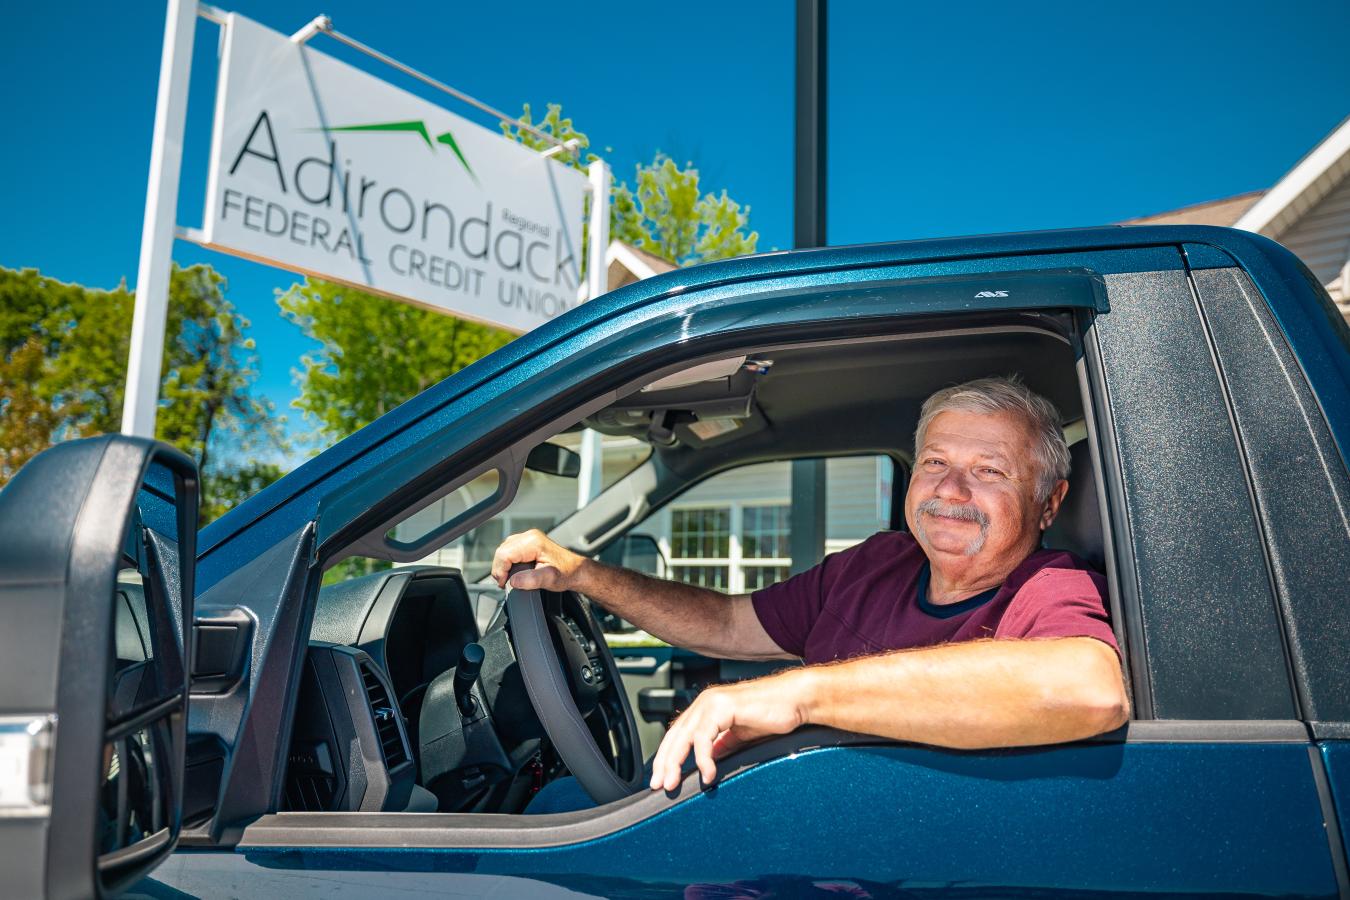 Adirondack Regional Federal Credit Union makes auto loans easy.